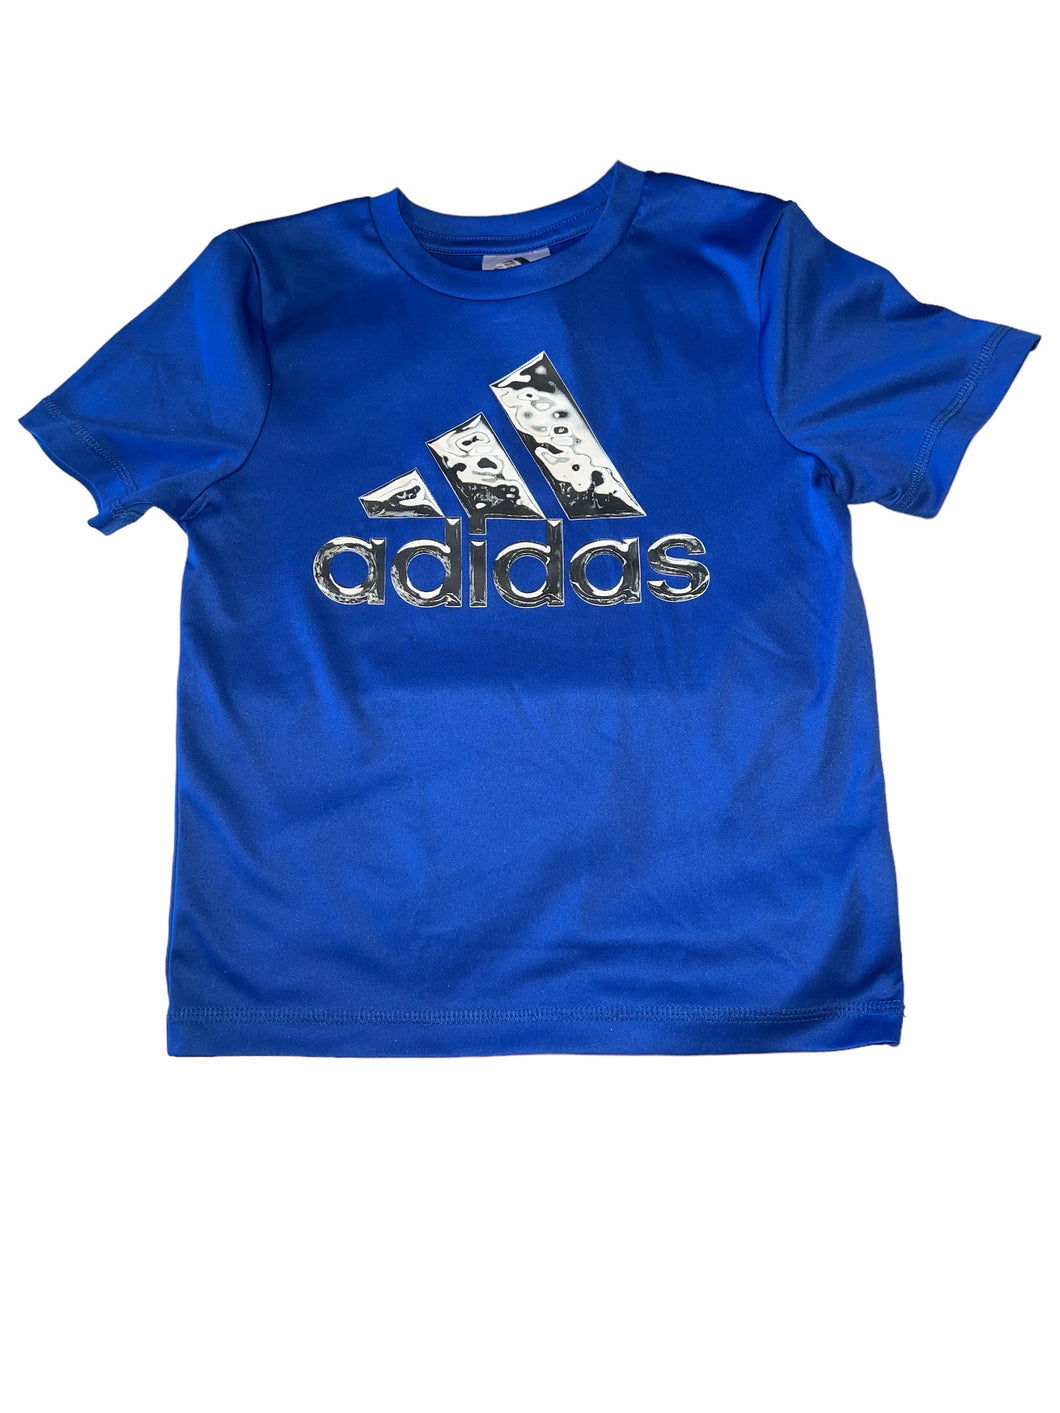 Adidas toddler boys short sleeve active logo tee shirt 4T